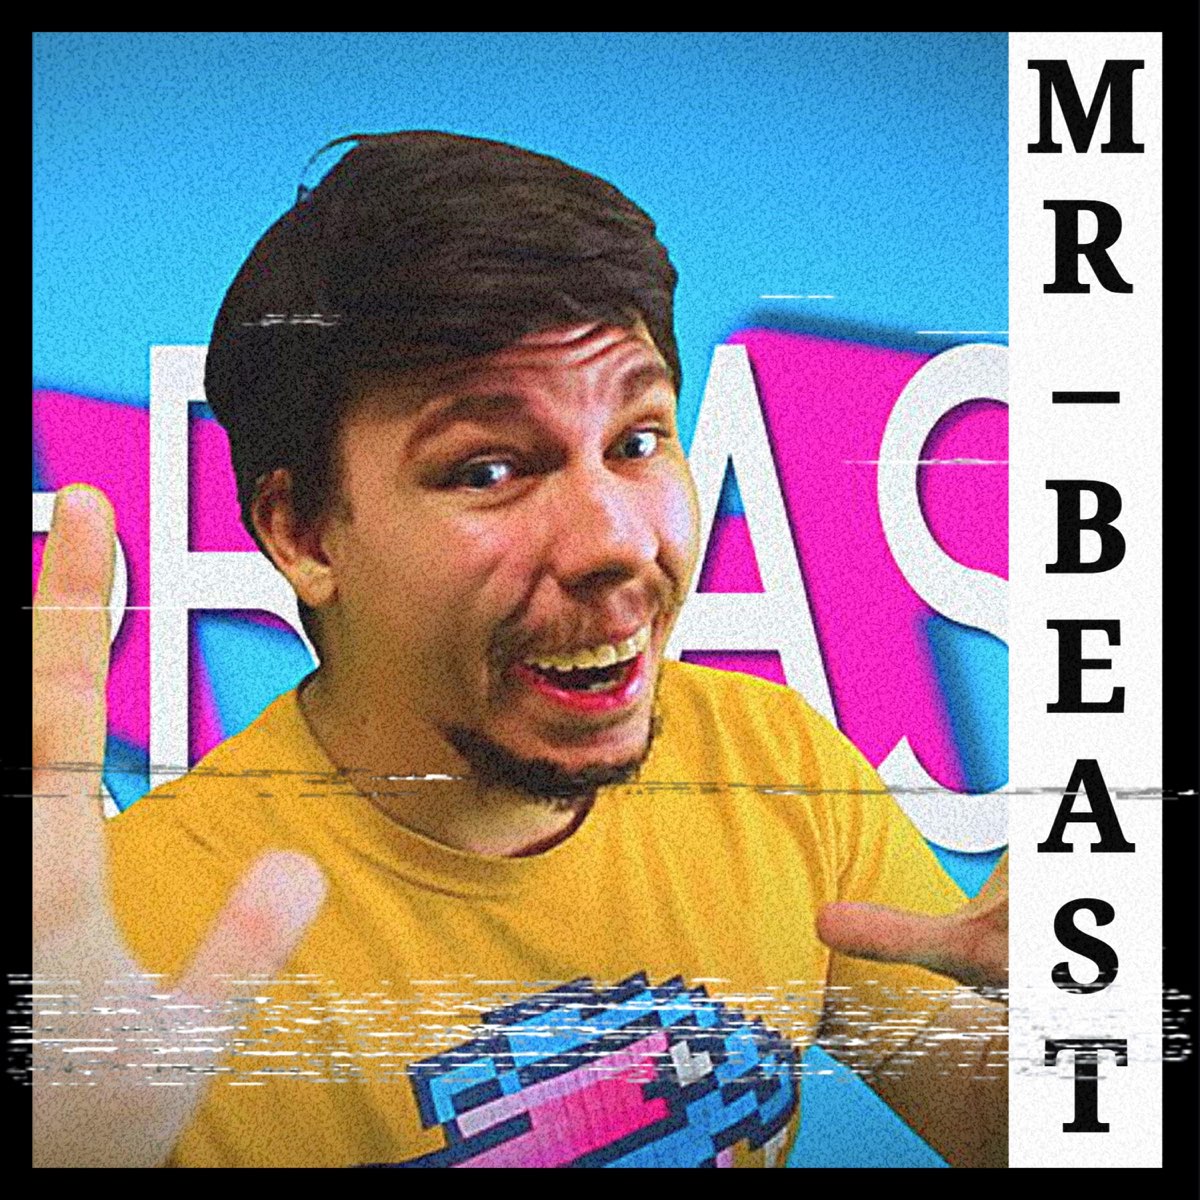 ‎Mr Beast Phonk - Single by 2ke on Apple Music